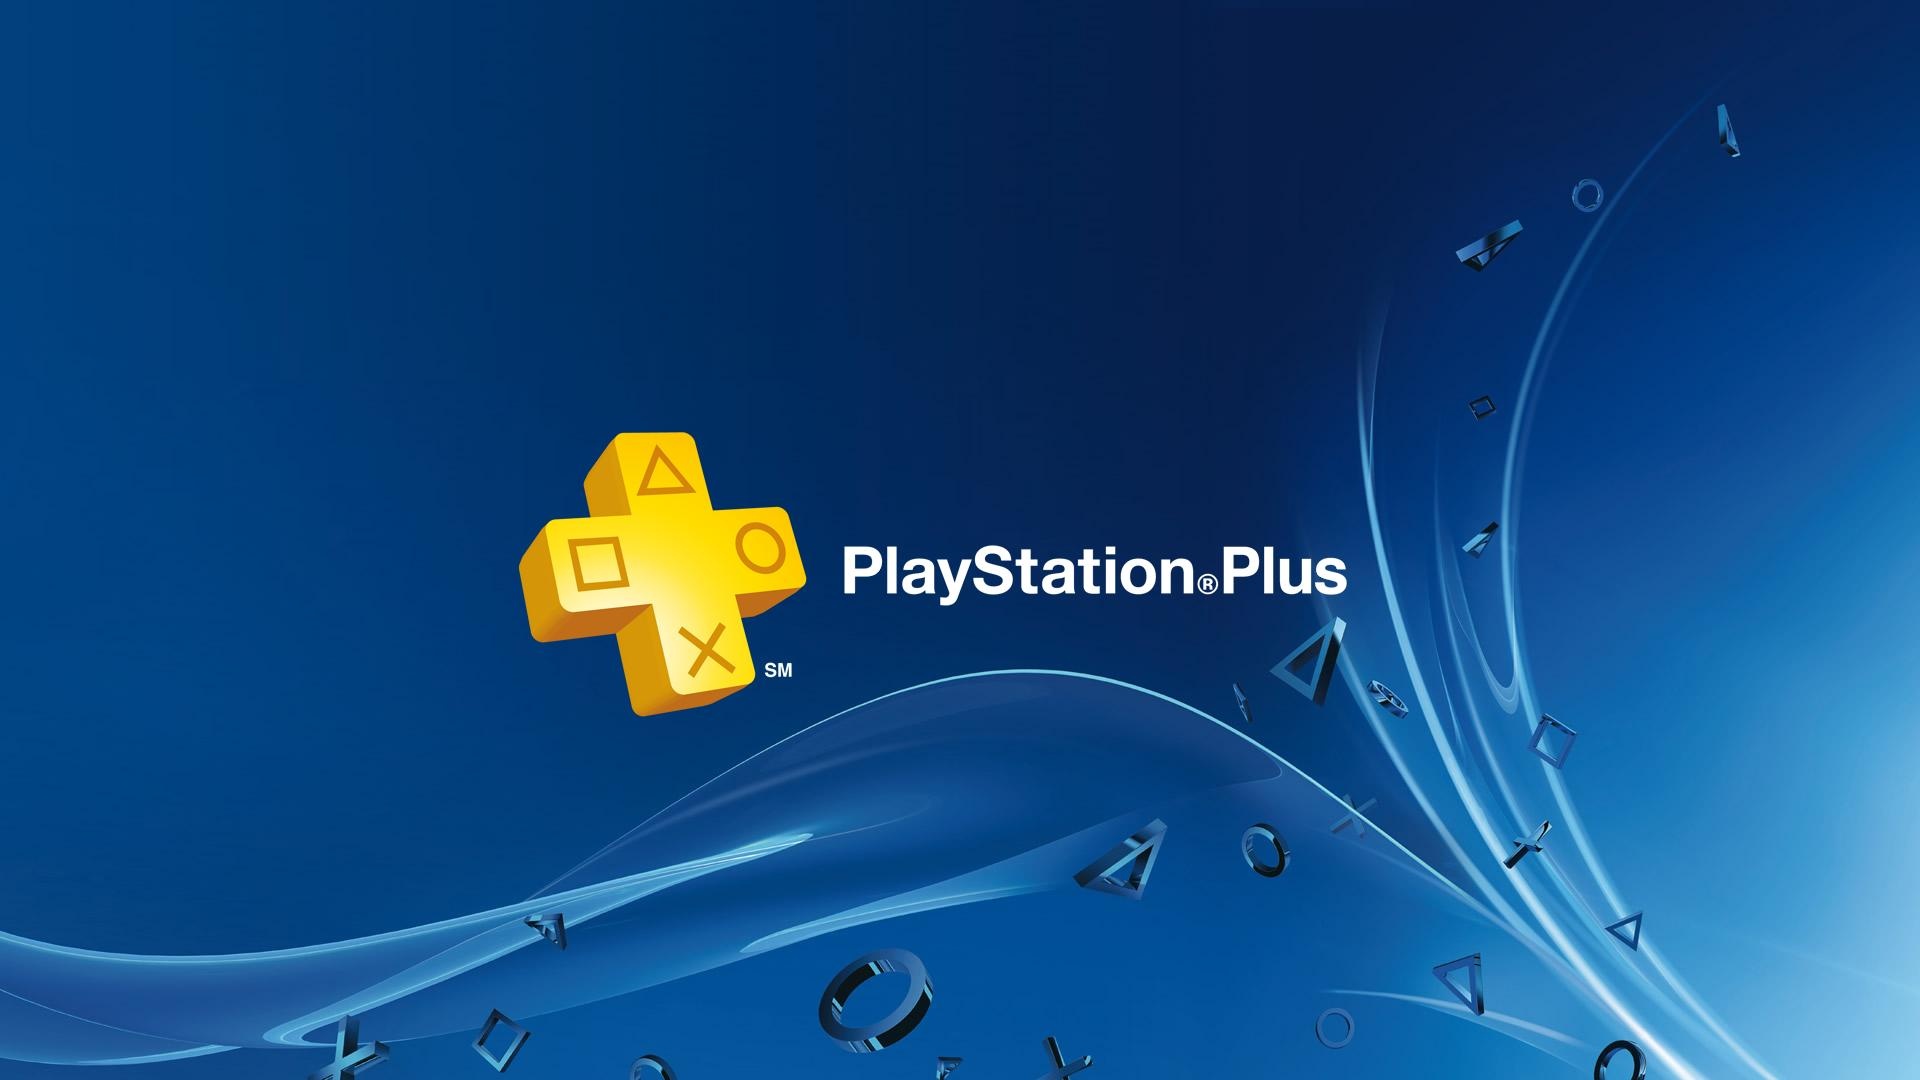 PlayStation Plus regional price decreases